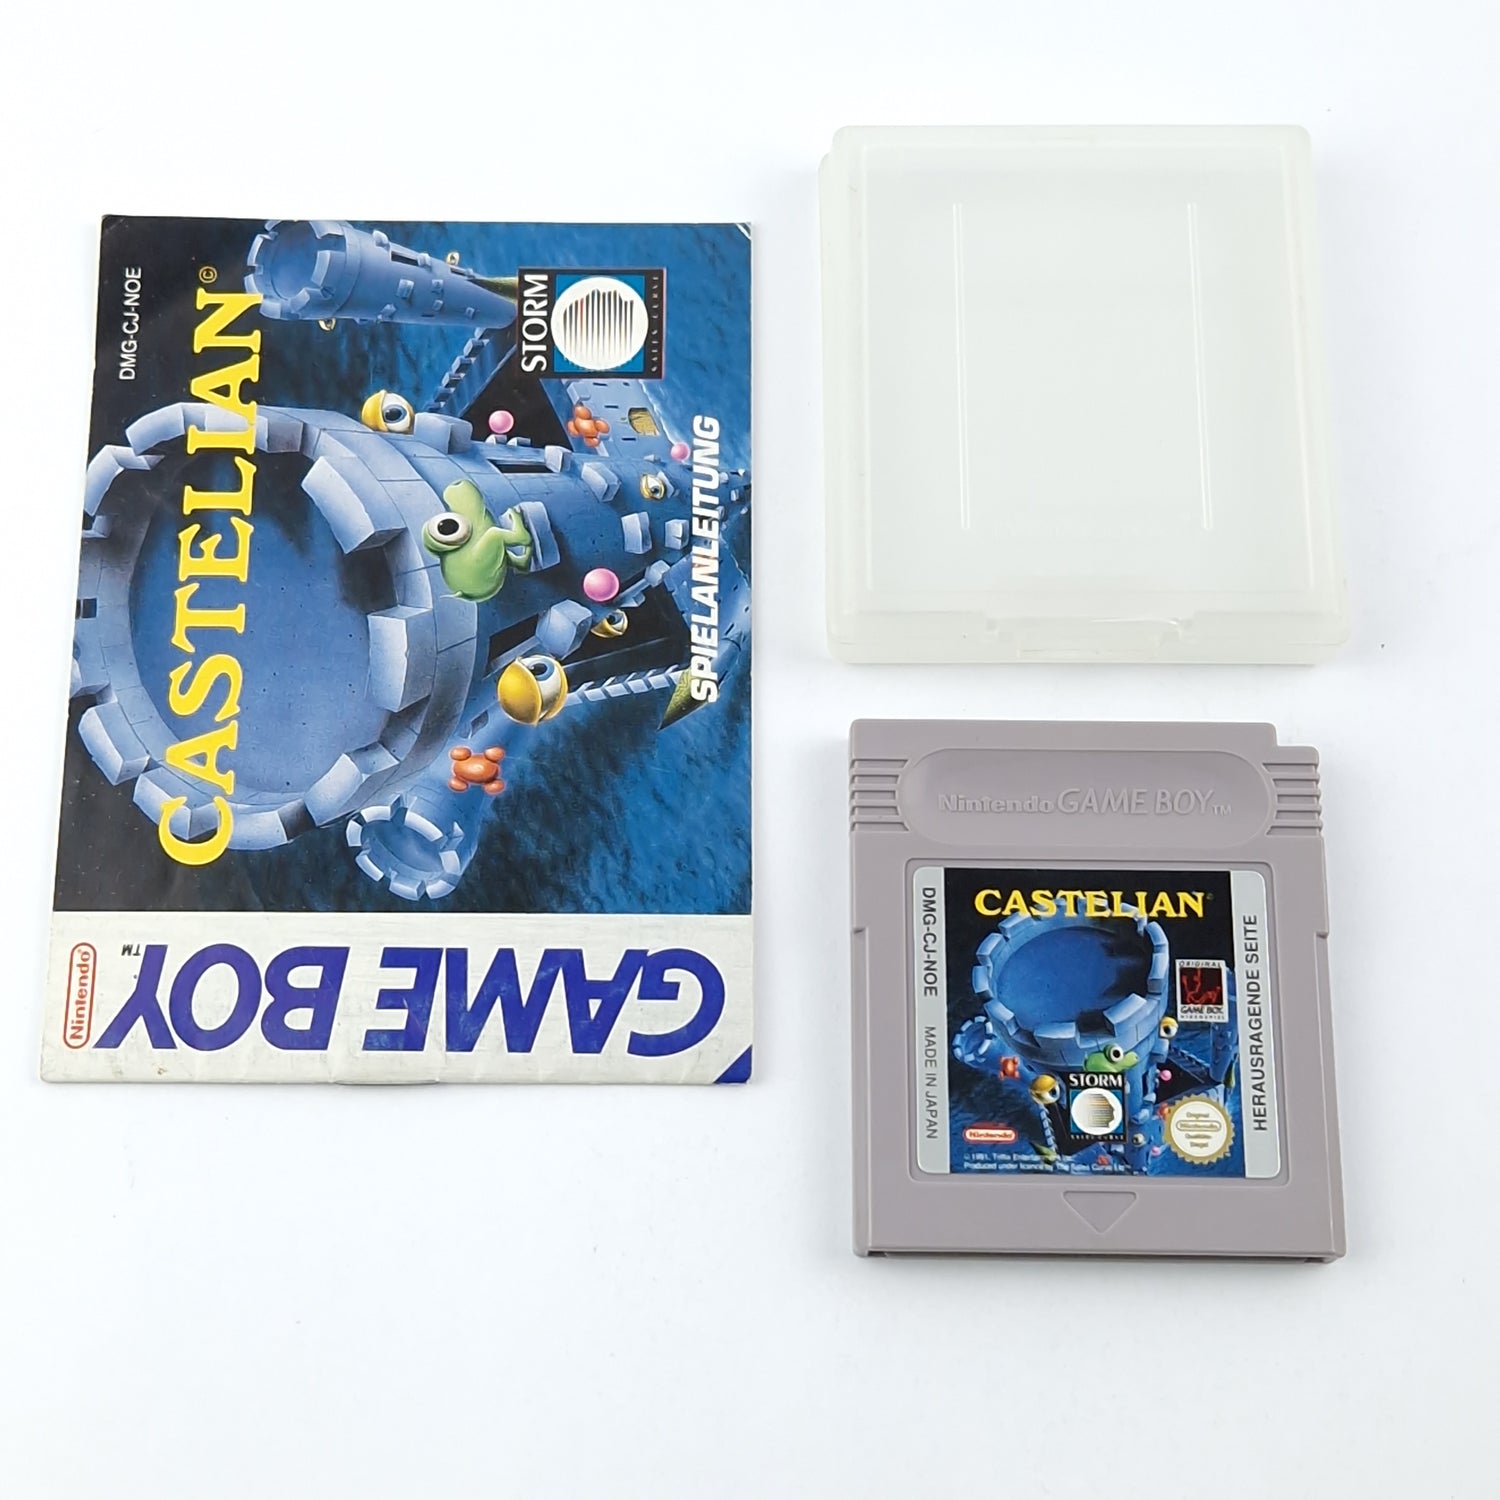 Nintendo Game Boy Classic Spiel : Castelian + Anleitung - Modul Cartridge NOE